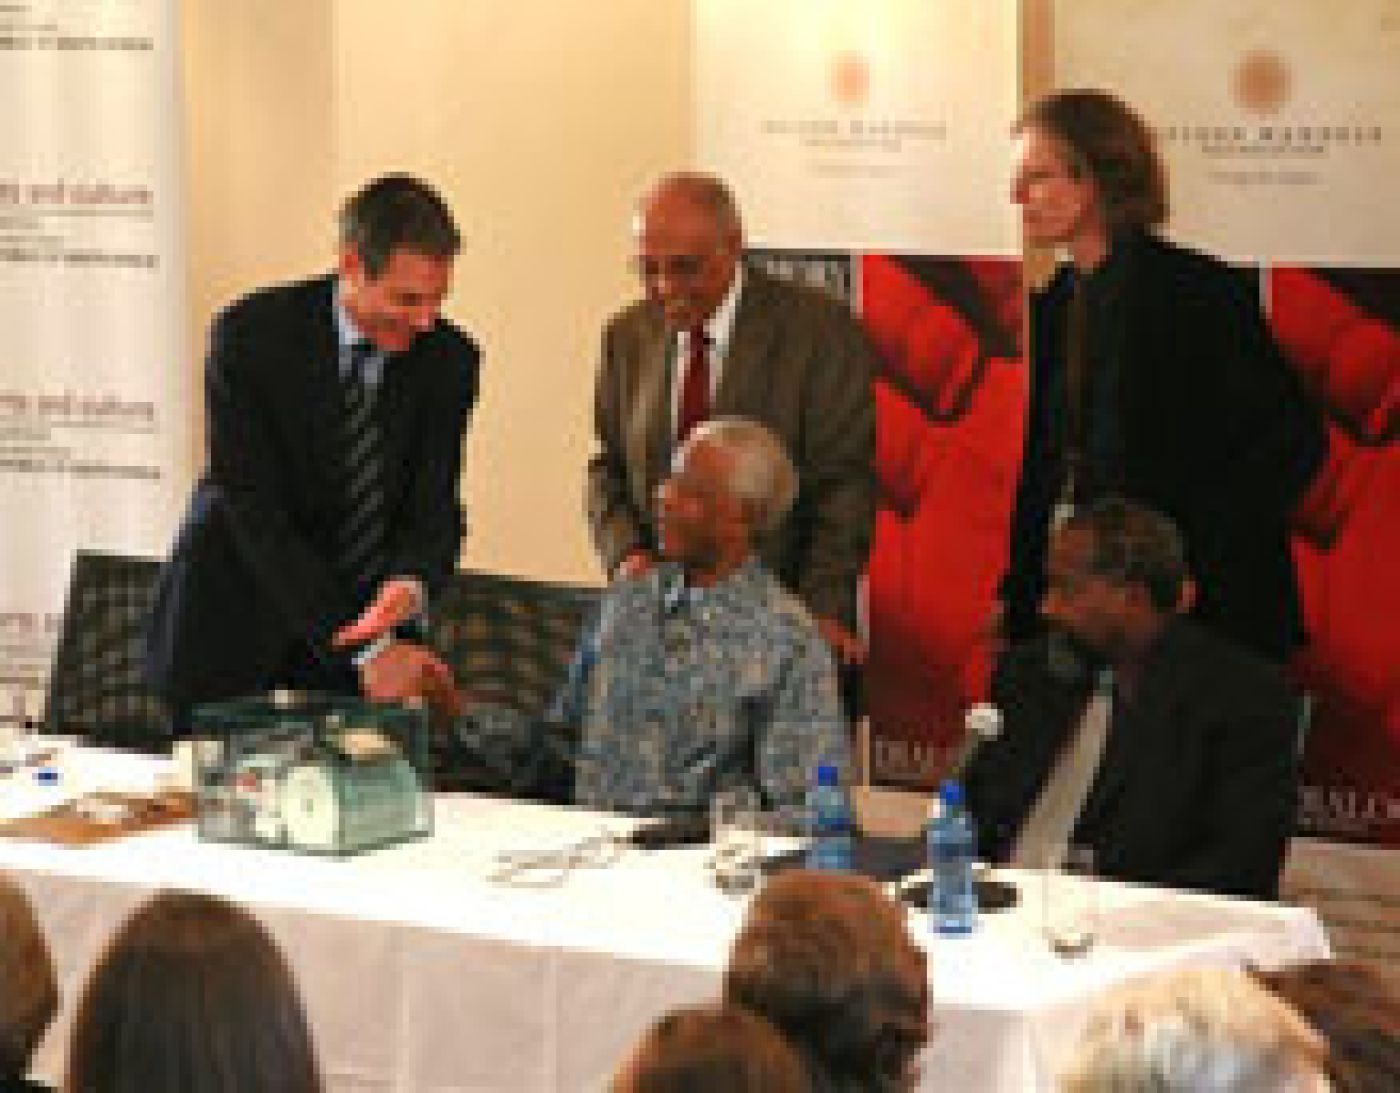 Rick Stengel shakes hands with Mr Mandela, as Ahmed Kathrada, Verne Harris and Minister Pallo Jordan look on